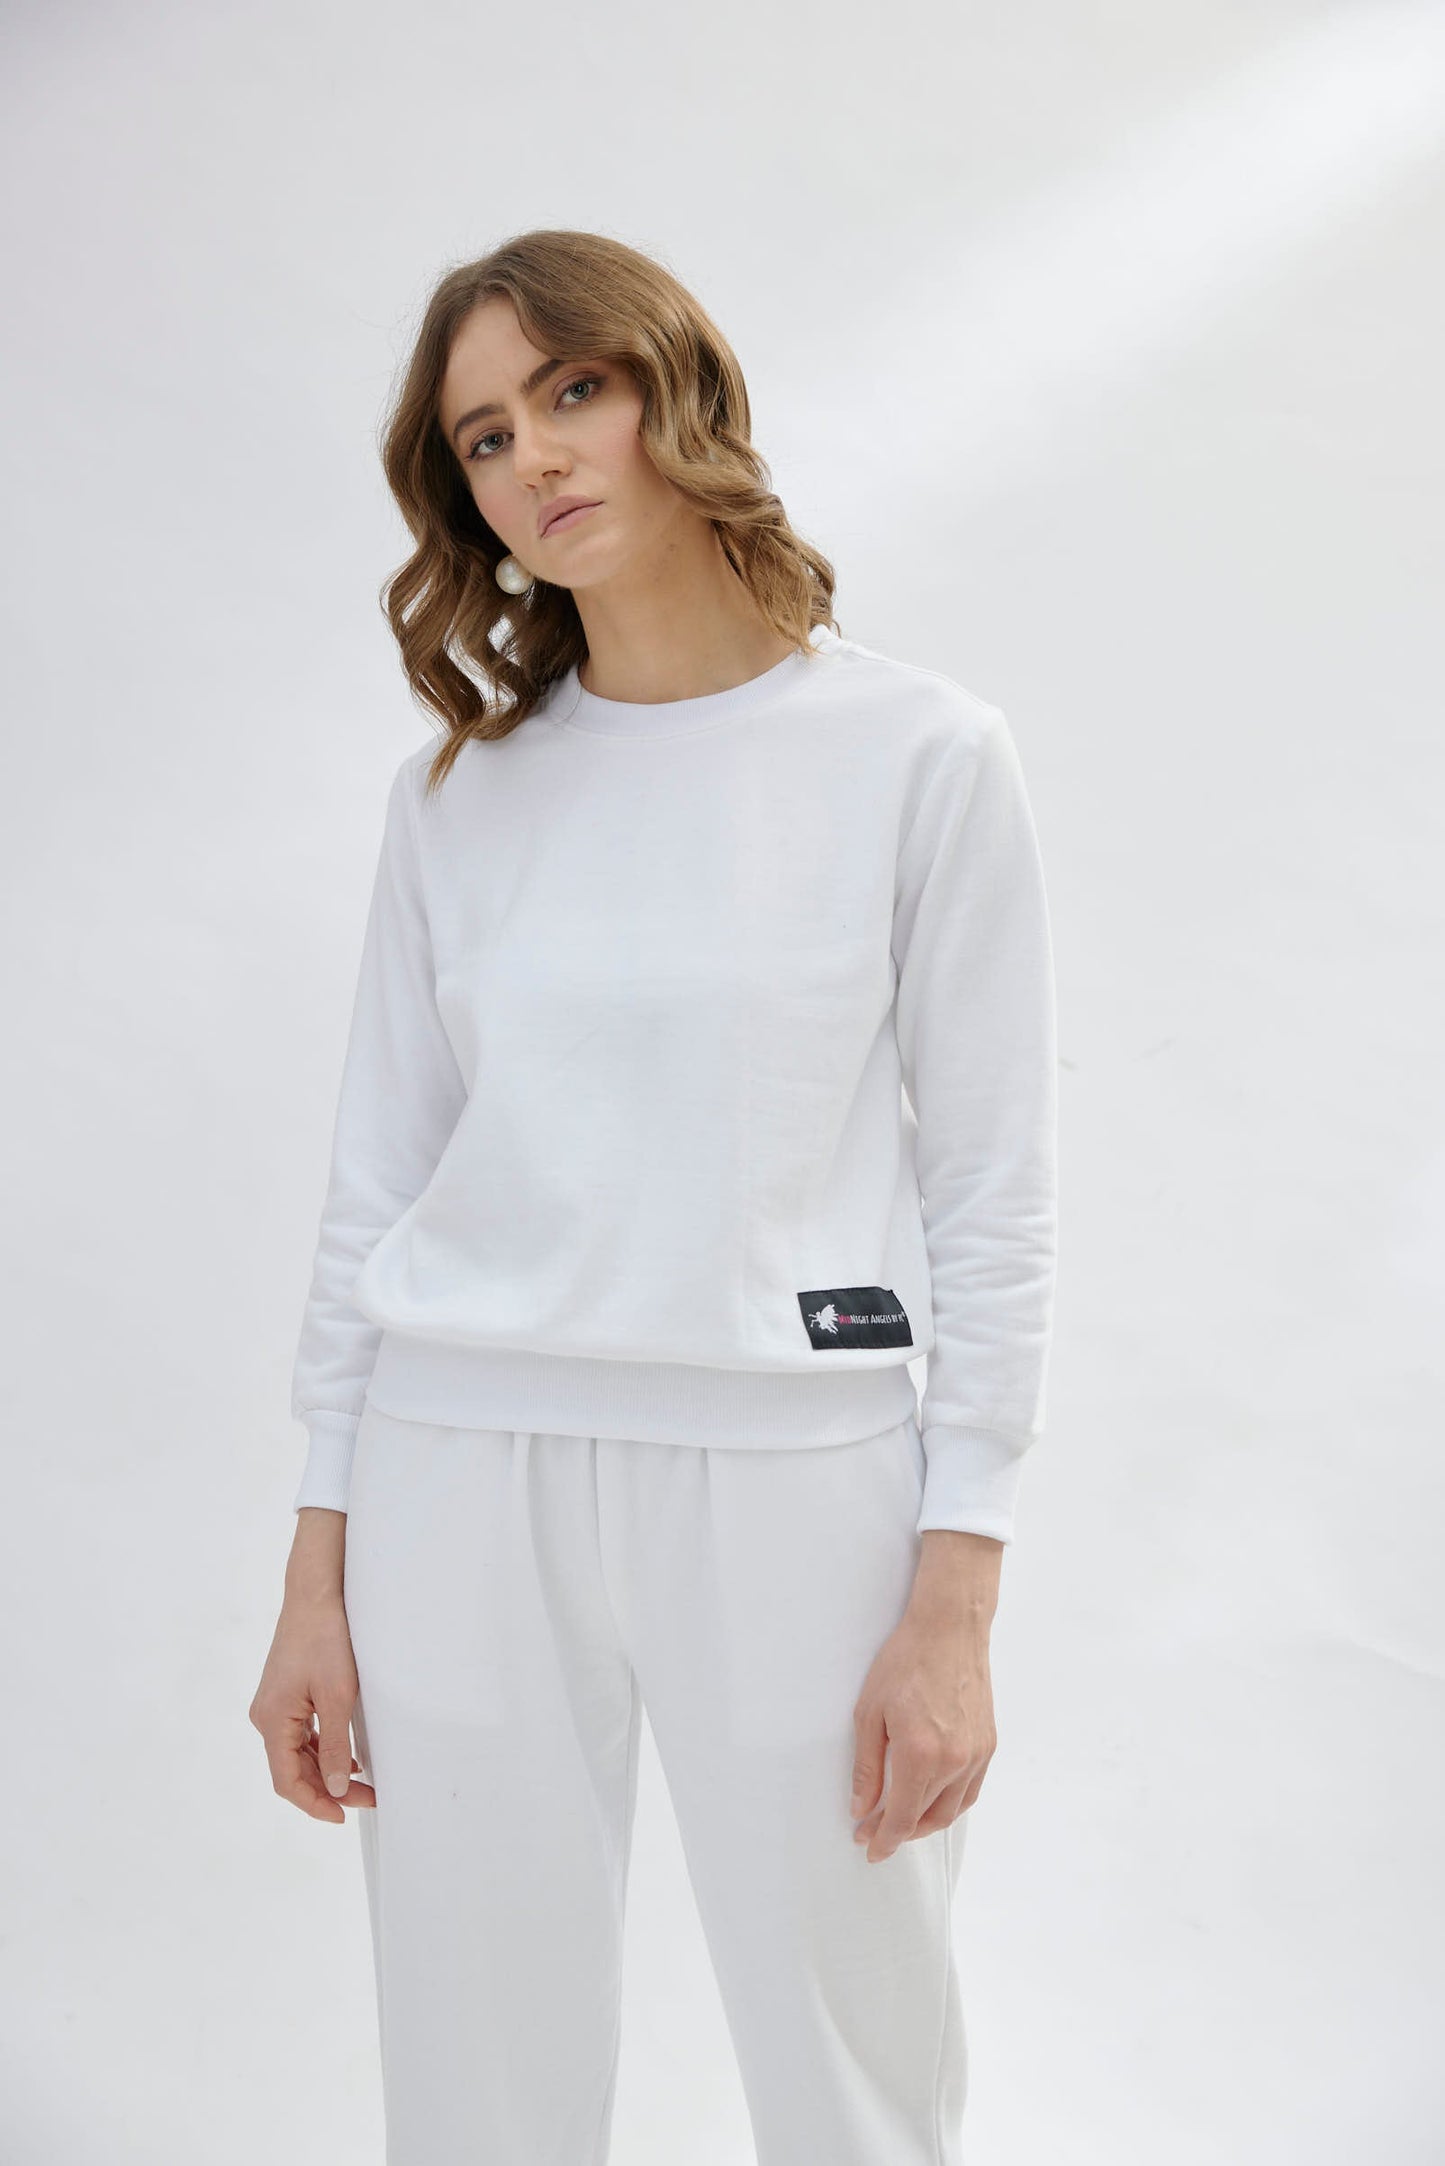 White Pearls Sweatshirt Set (Women)